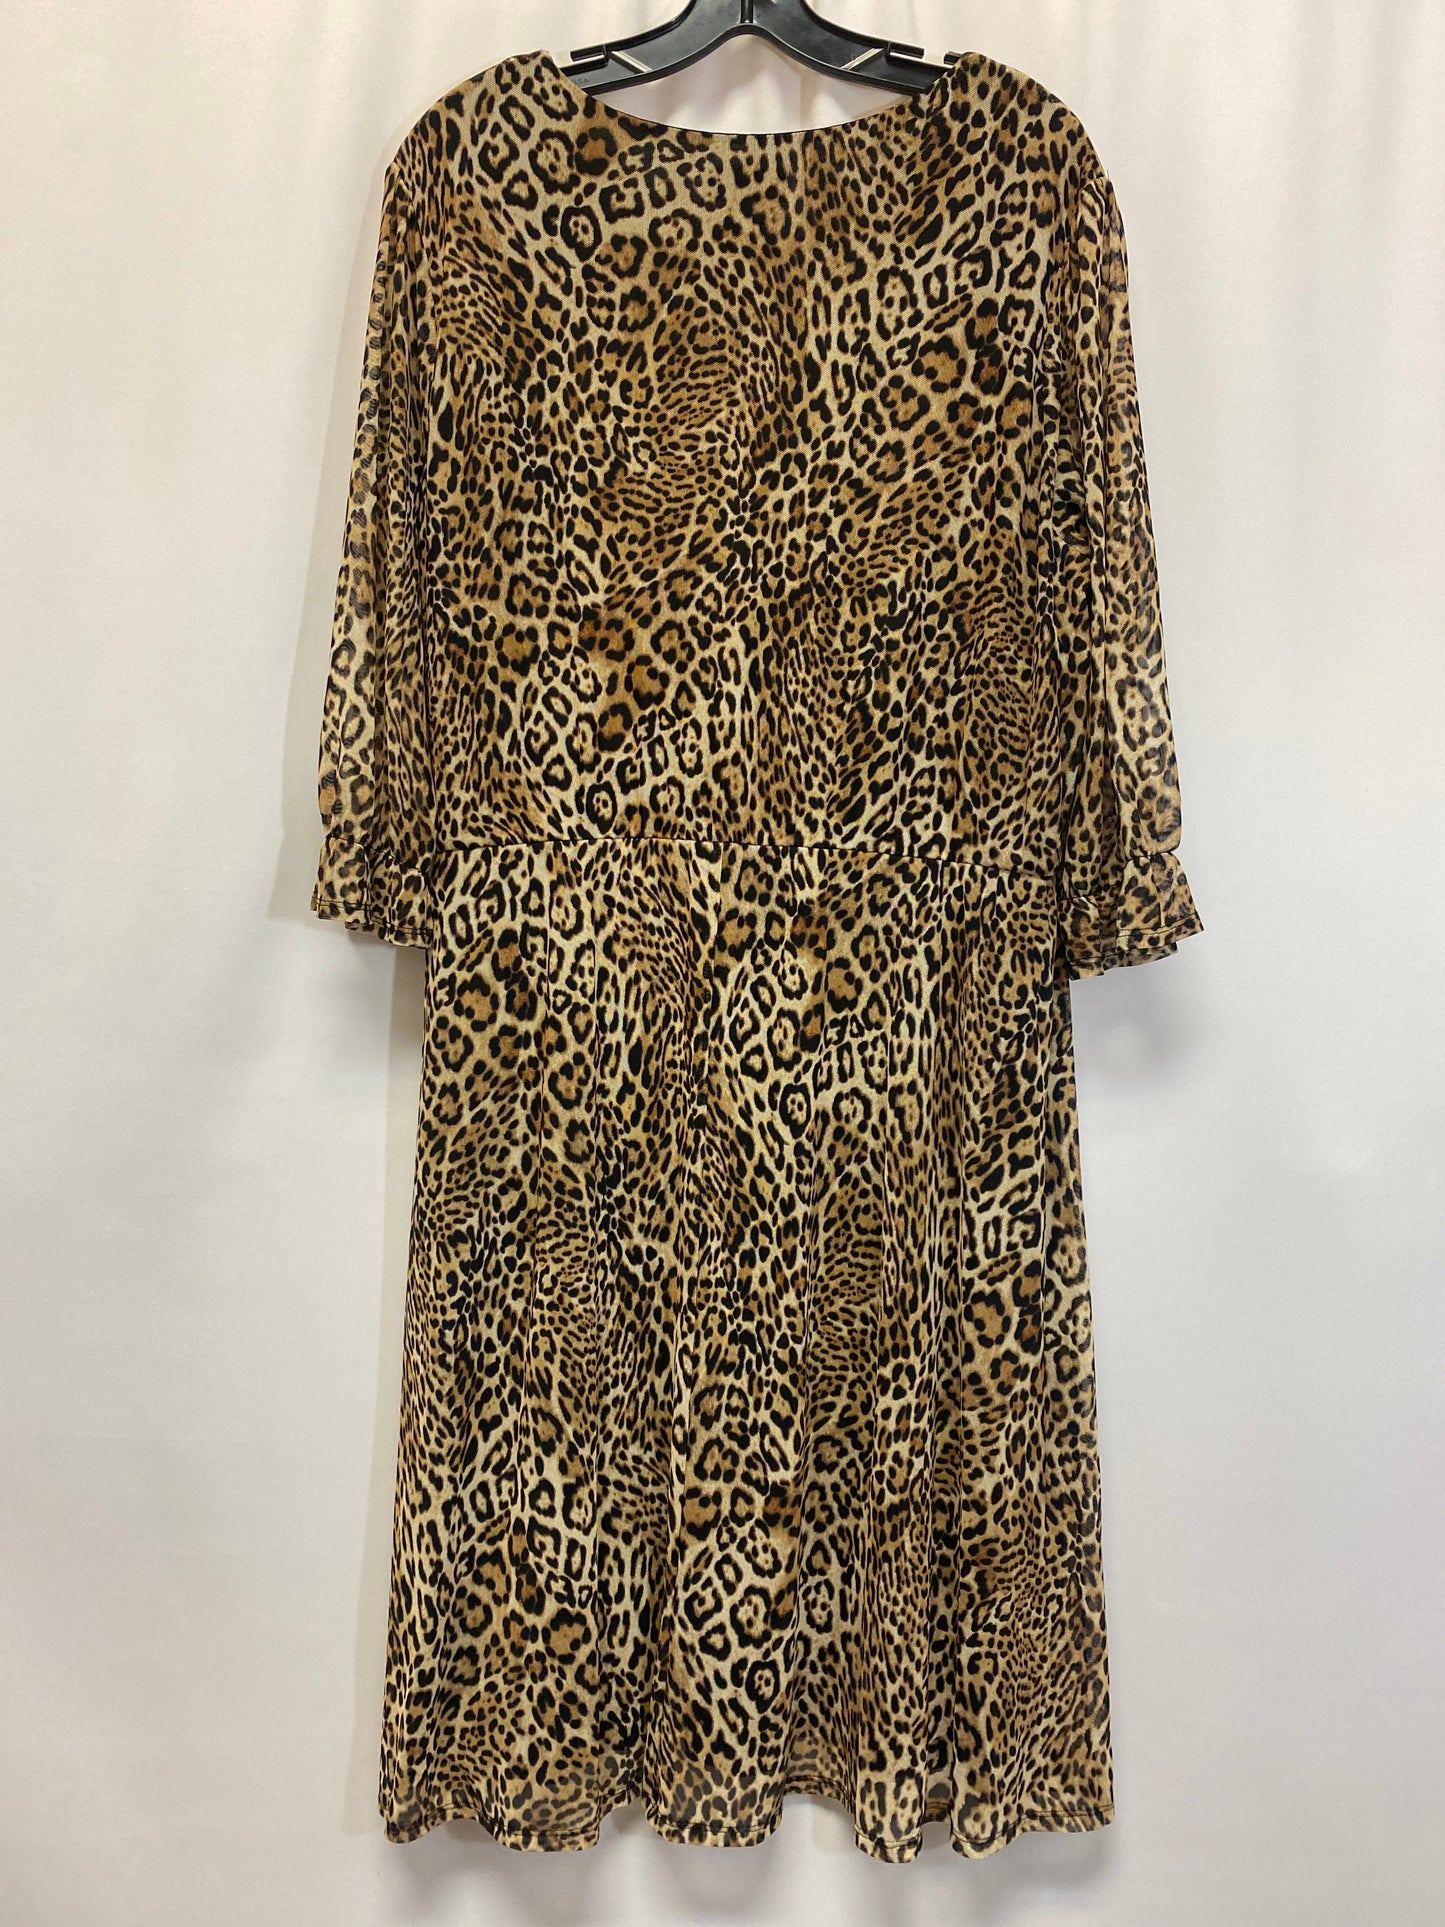 Animal Print Dress Casual Midi Clothes Mentor, Size 2x